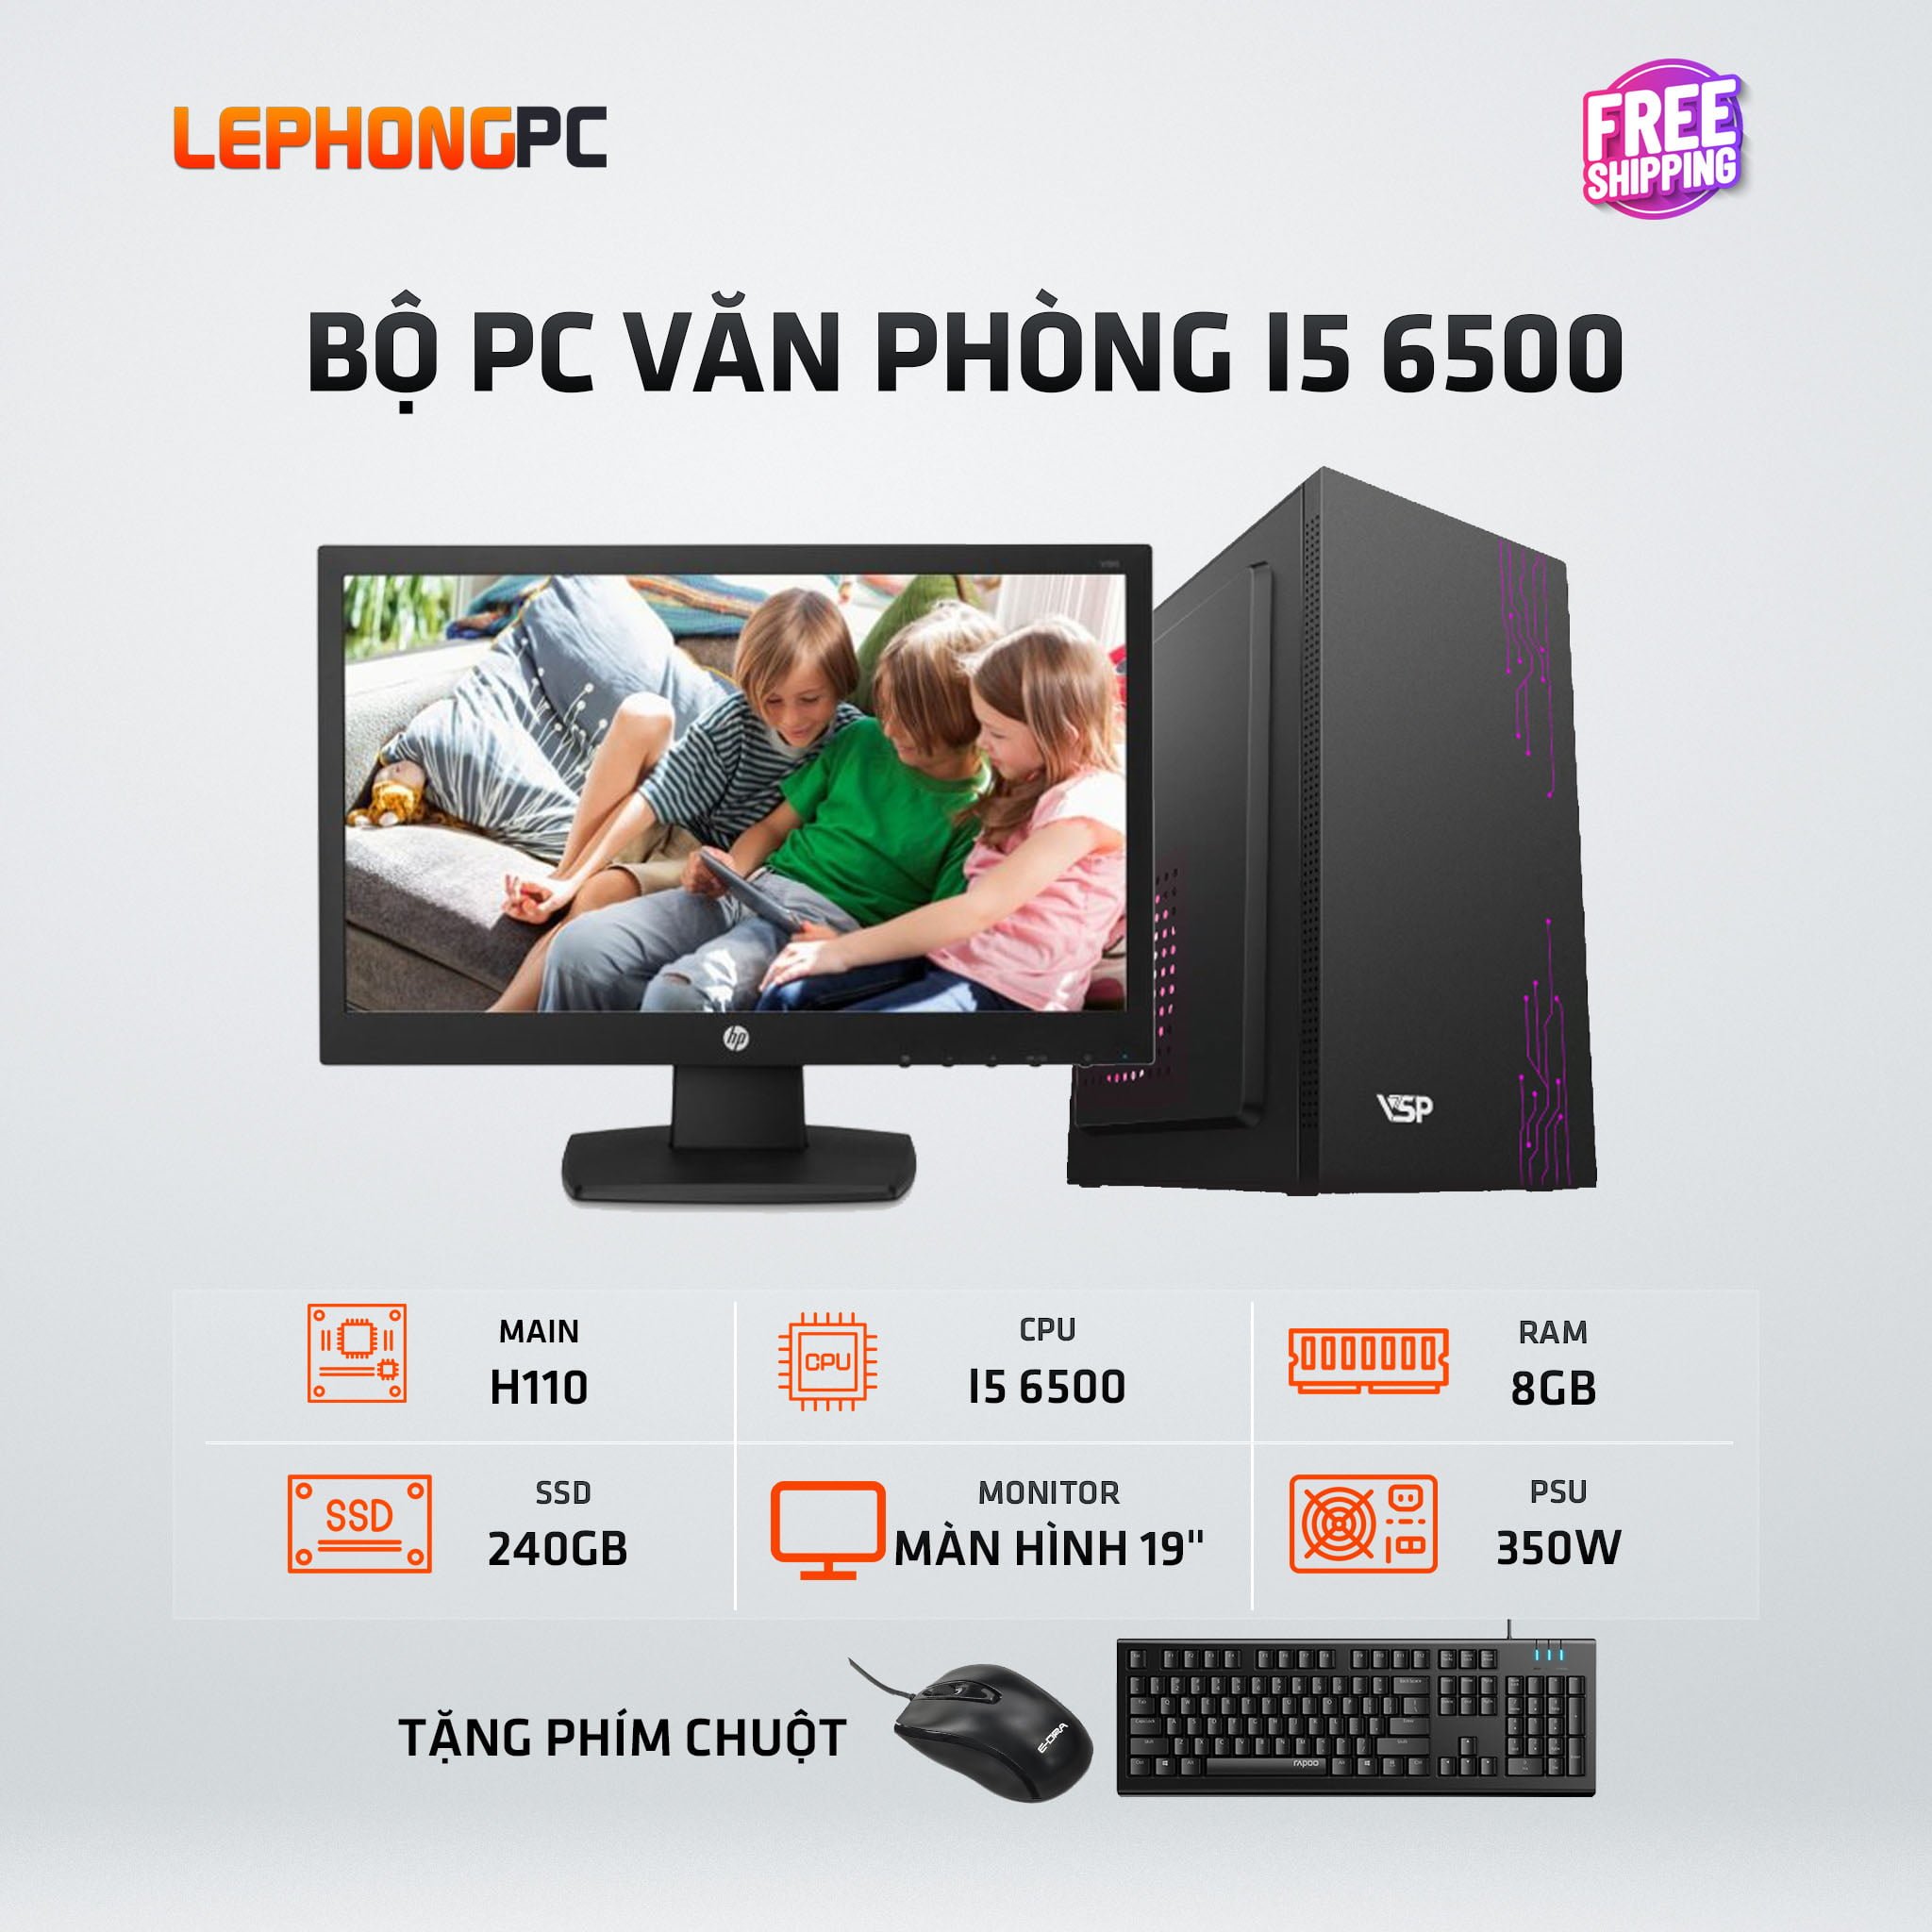 BO PC VAN PHONG I5 6500